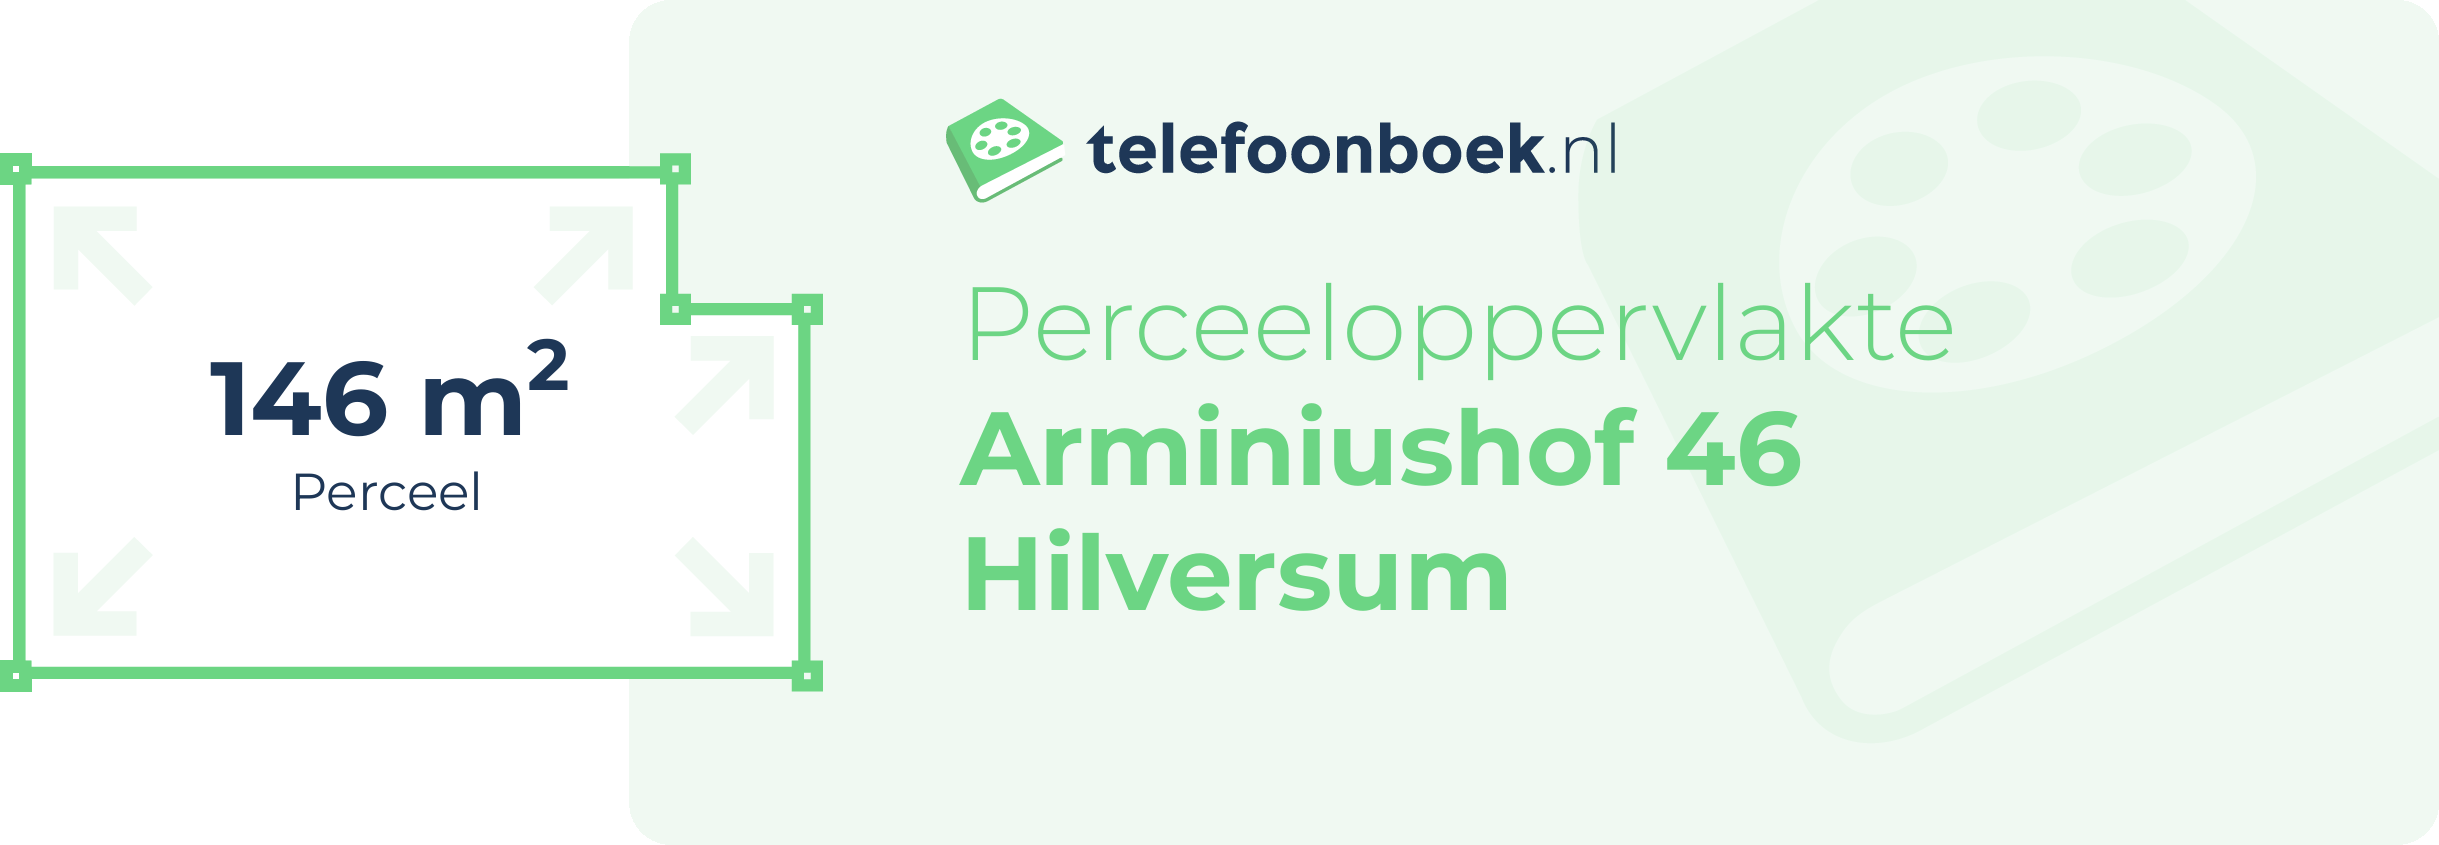 Perceeloppervlakte Arminiushof 46 Hilversum